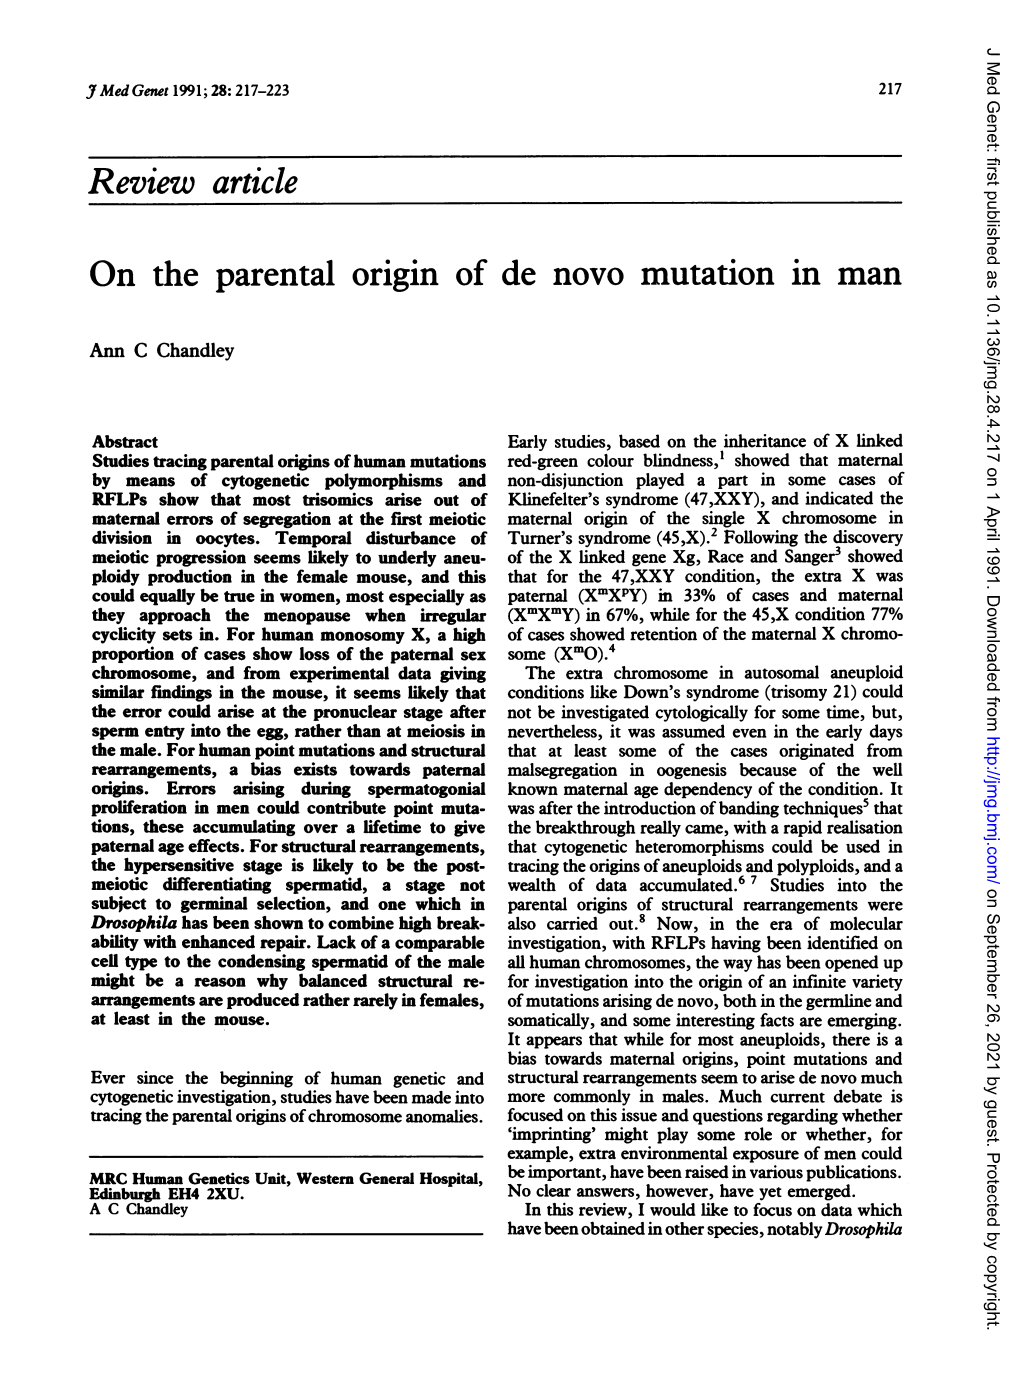 Review Article on the Parental Origin of De Novo Mutation In